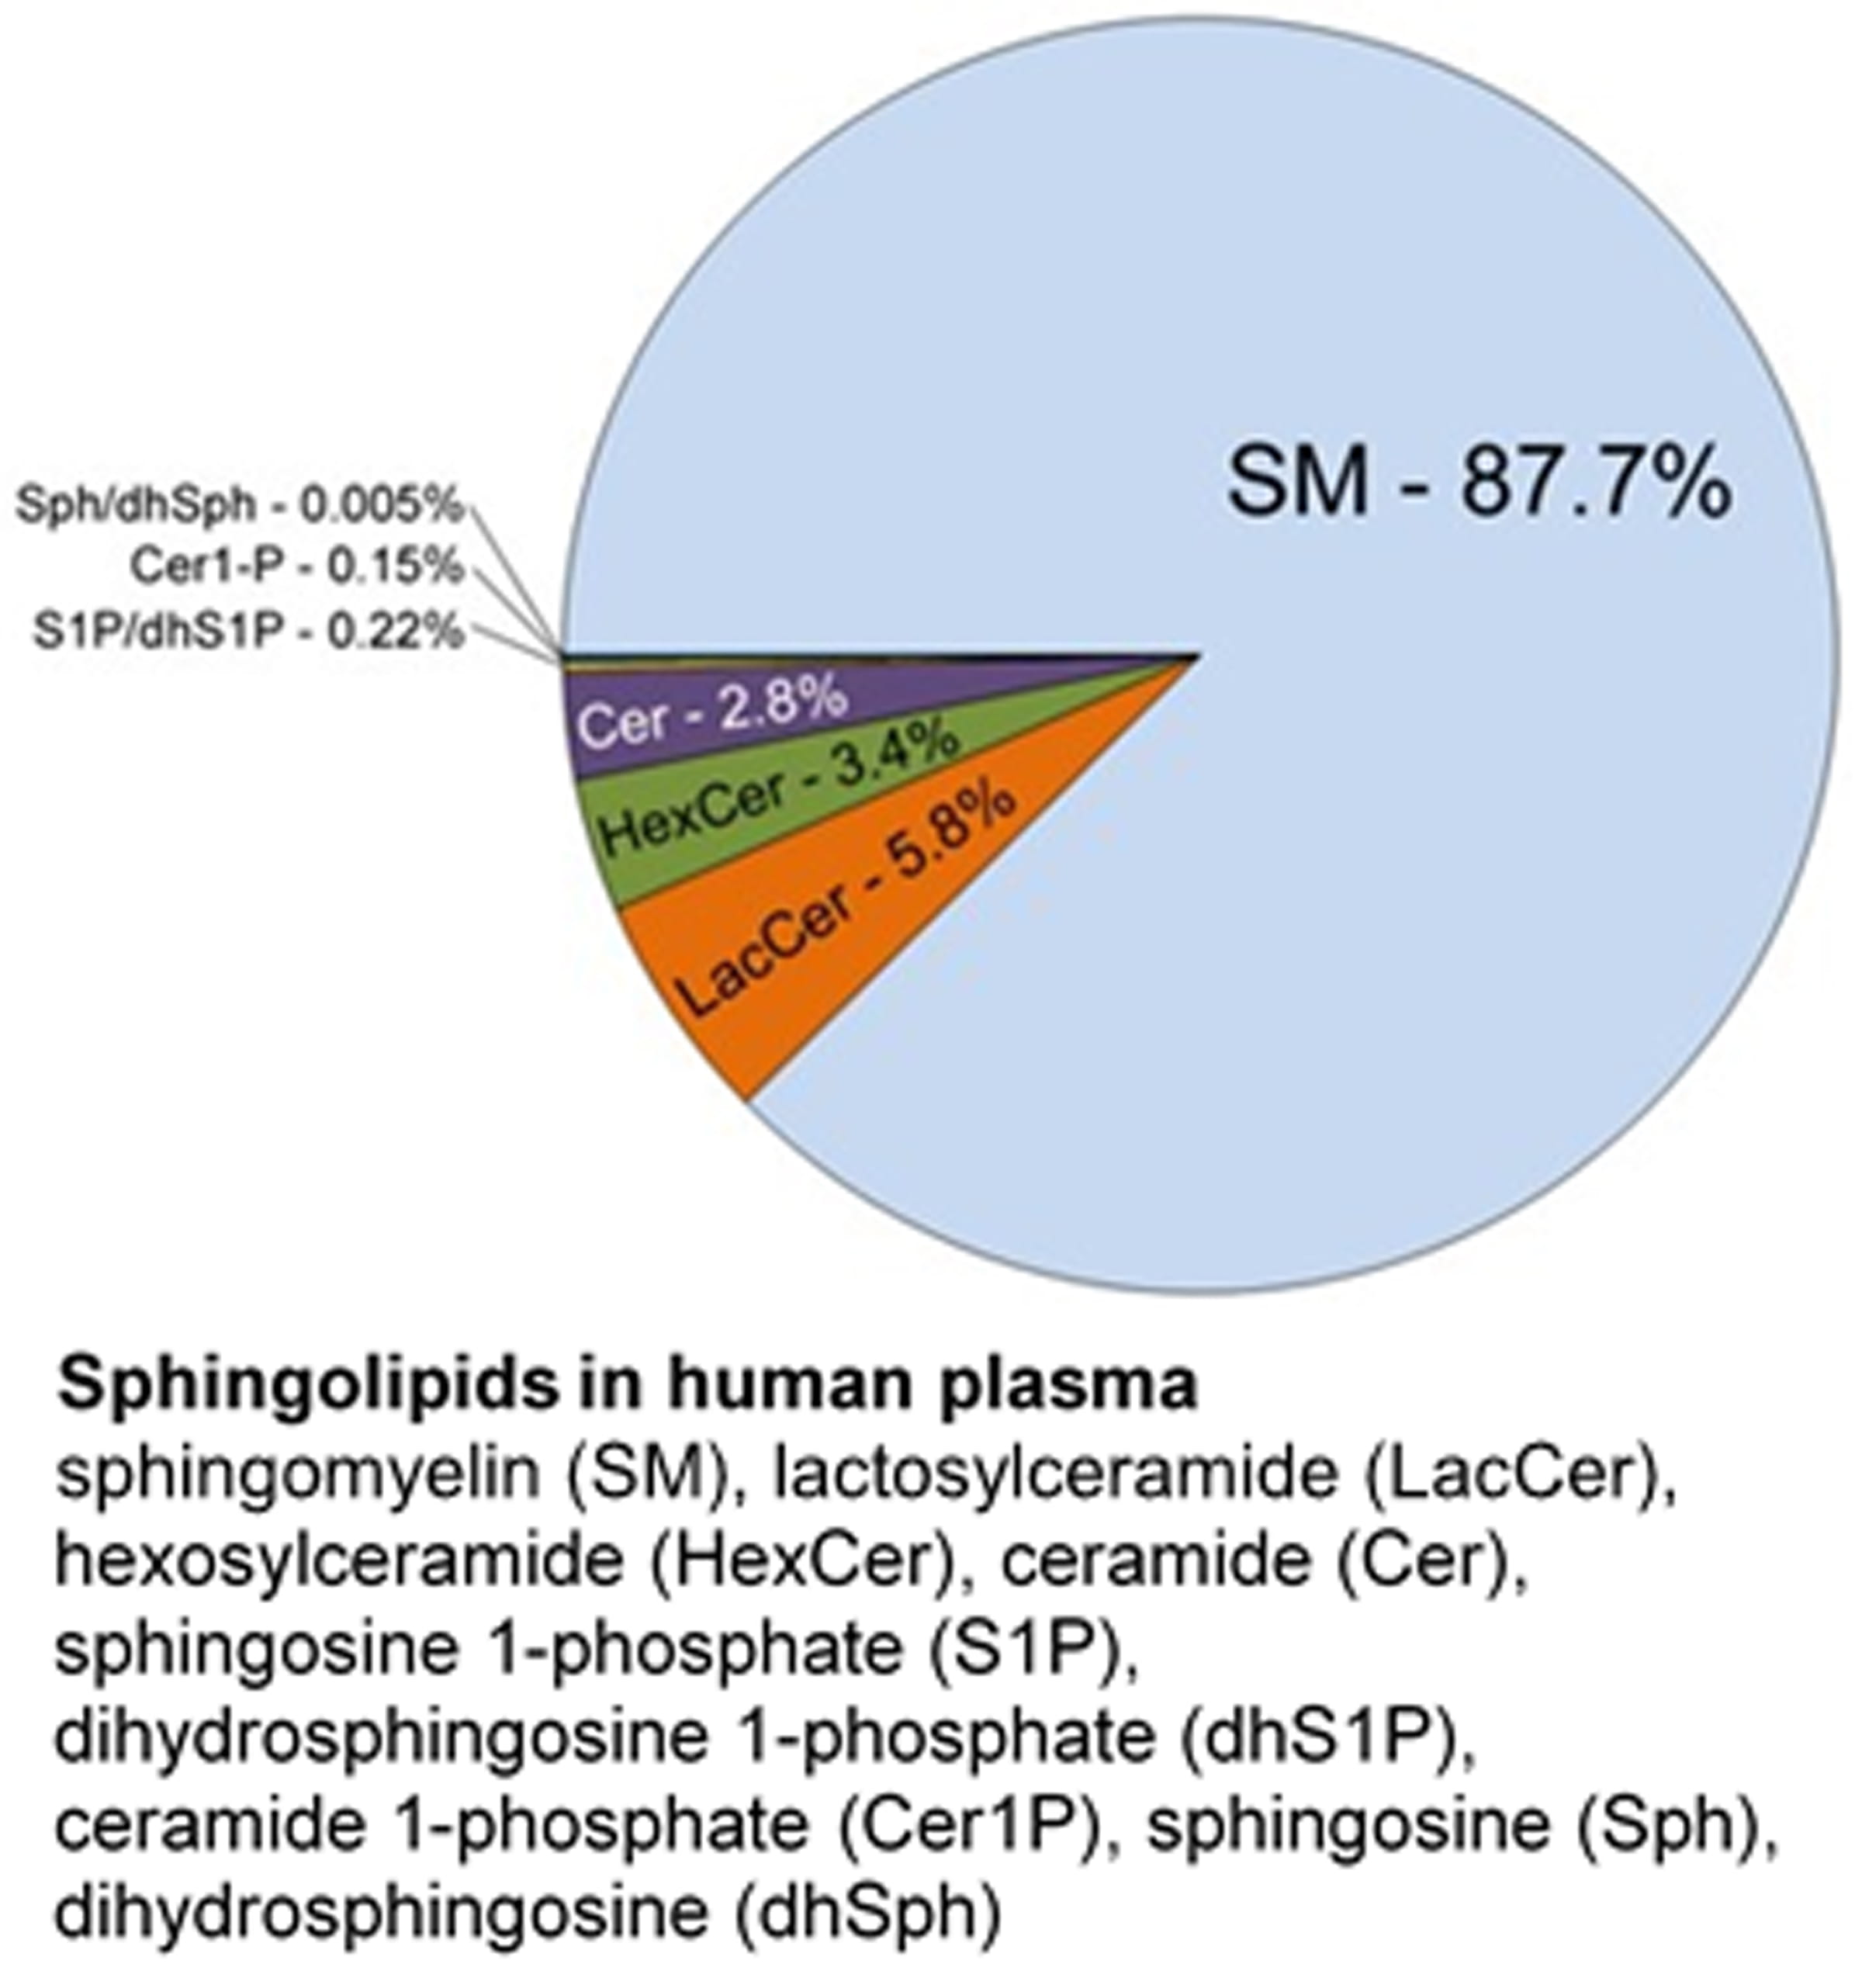 Pie chart showing distribution of sphingolipids in human plasma